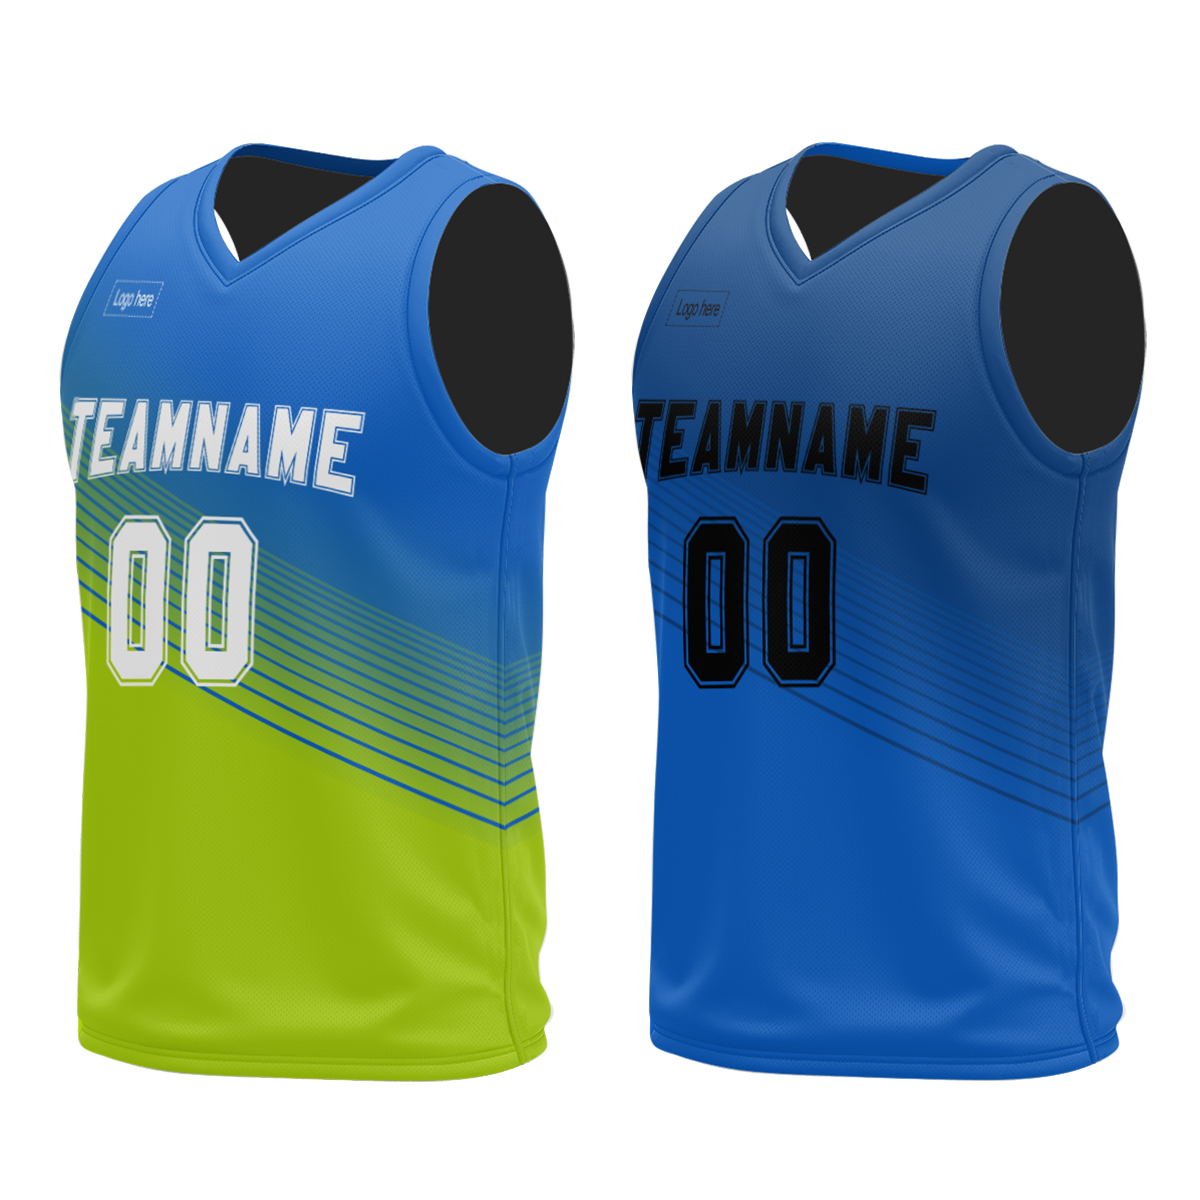 wholesale-mens-basketball-jerseys-custom-printing-on-demand-polyester-reversible-basketball-shirts-at-cj-pod-5